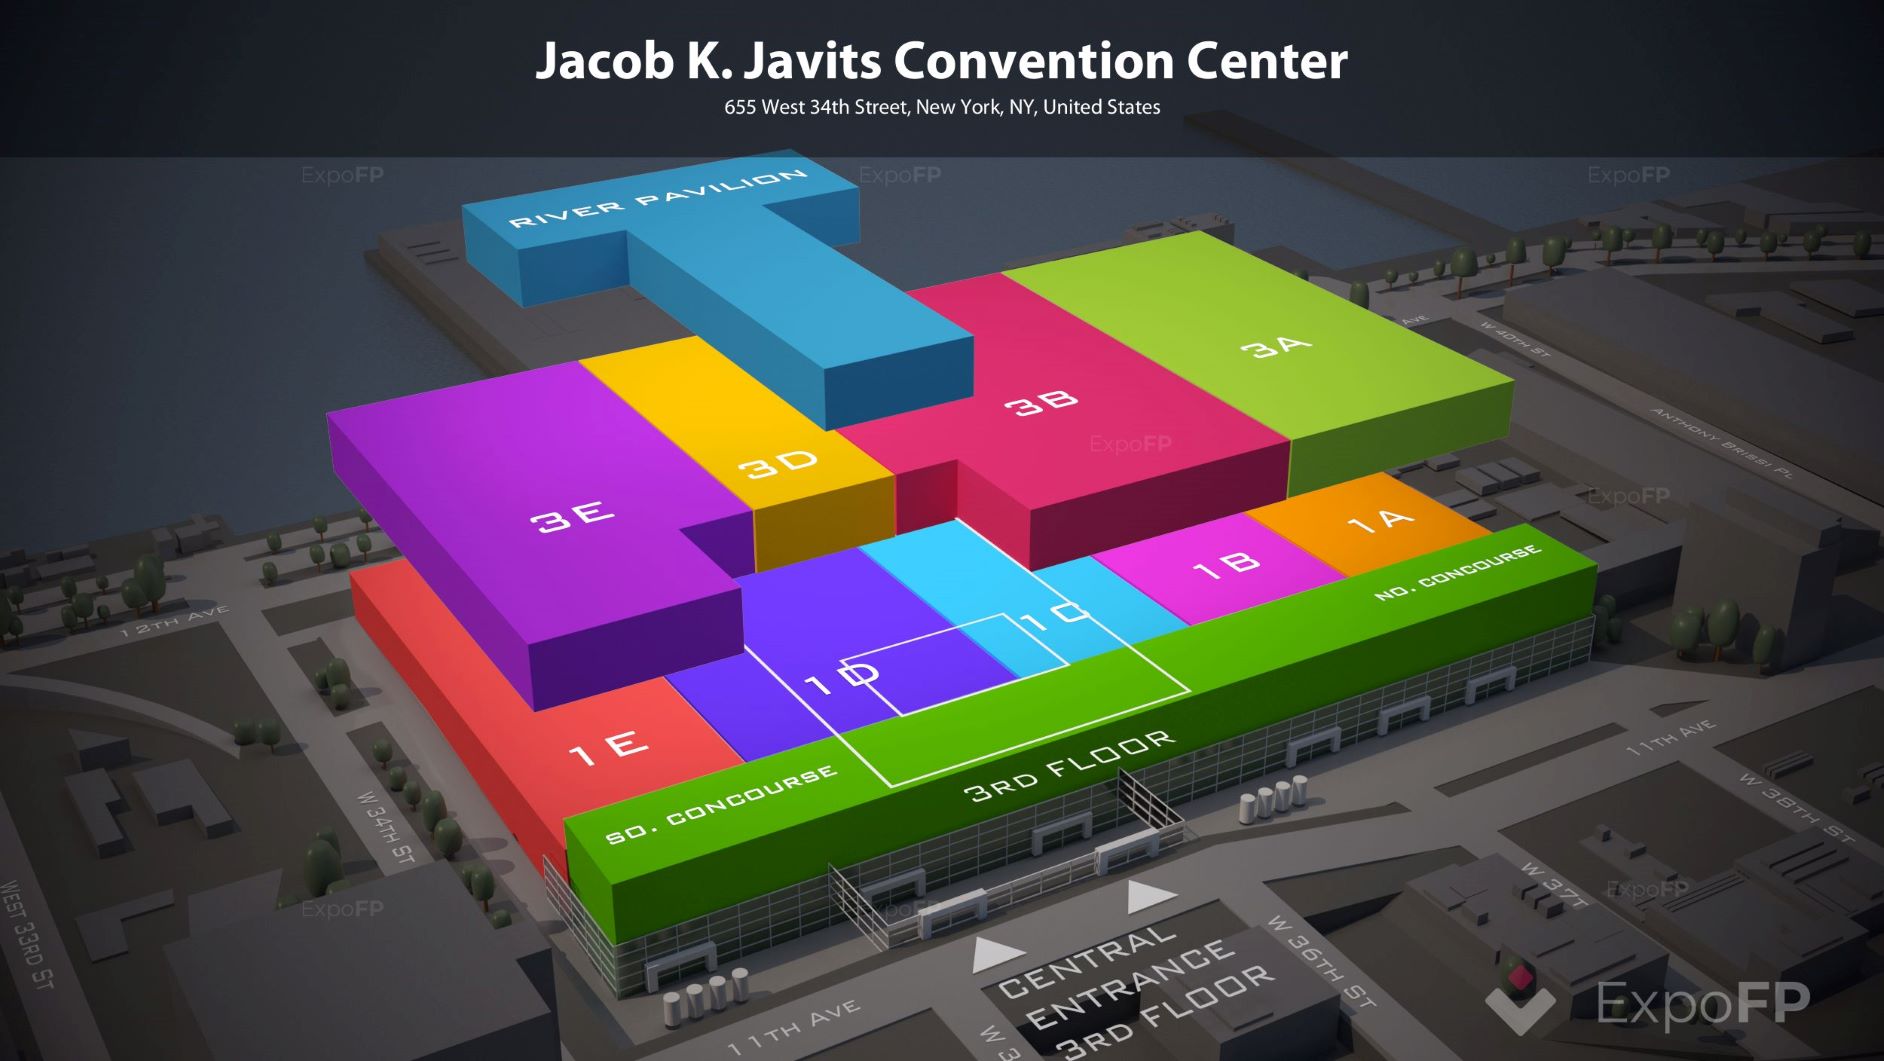 Jacob Javits Convention Center wifi